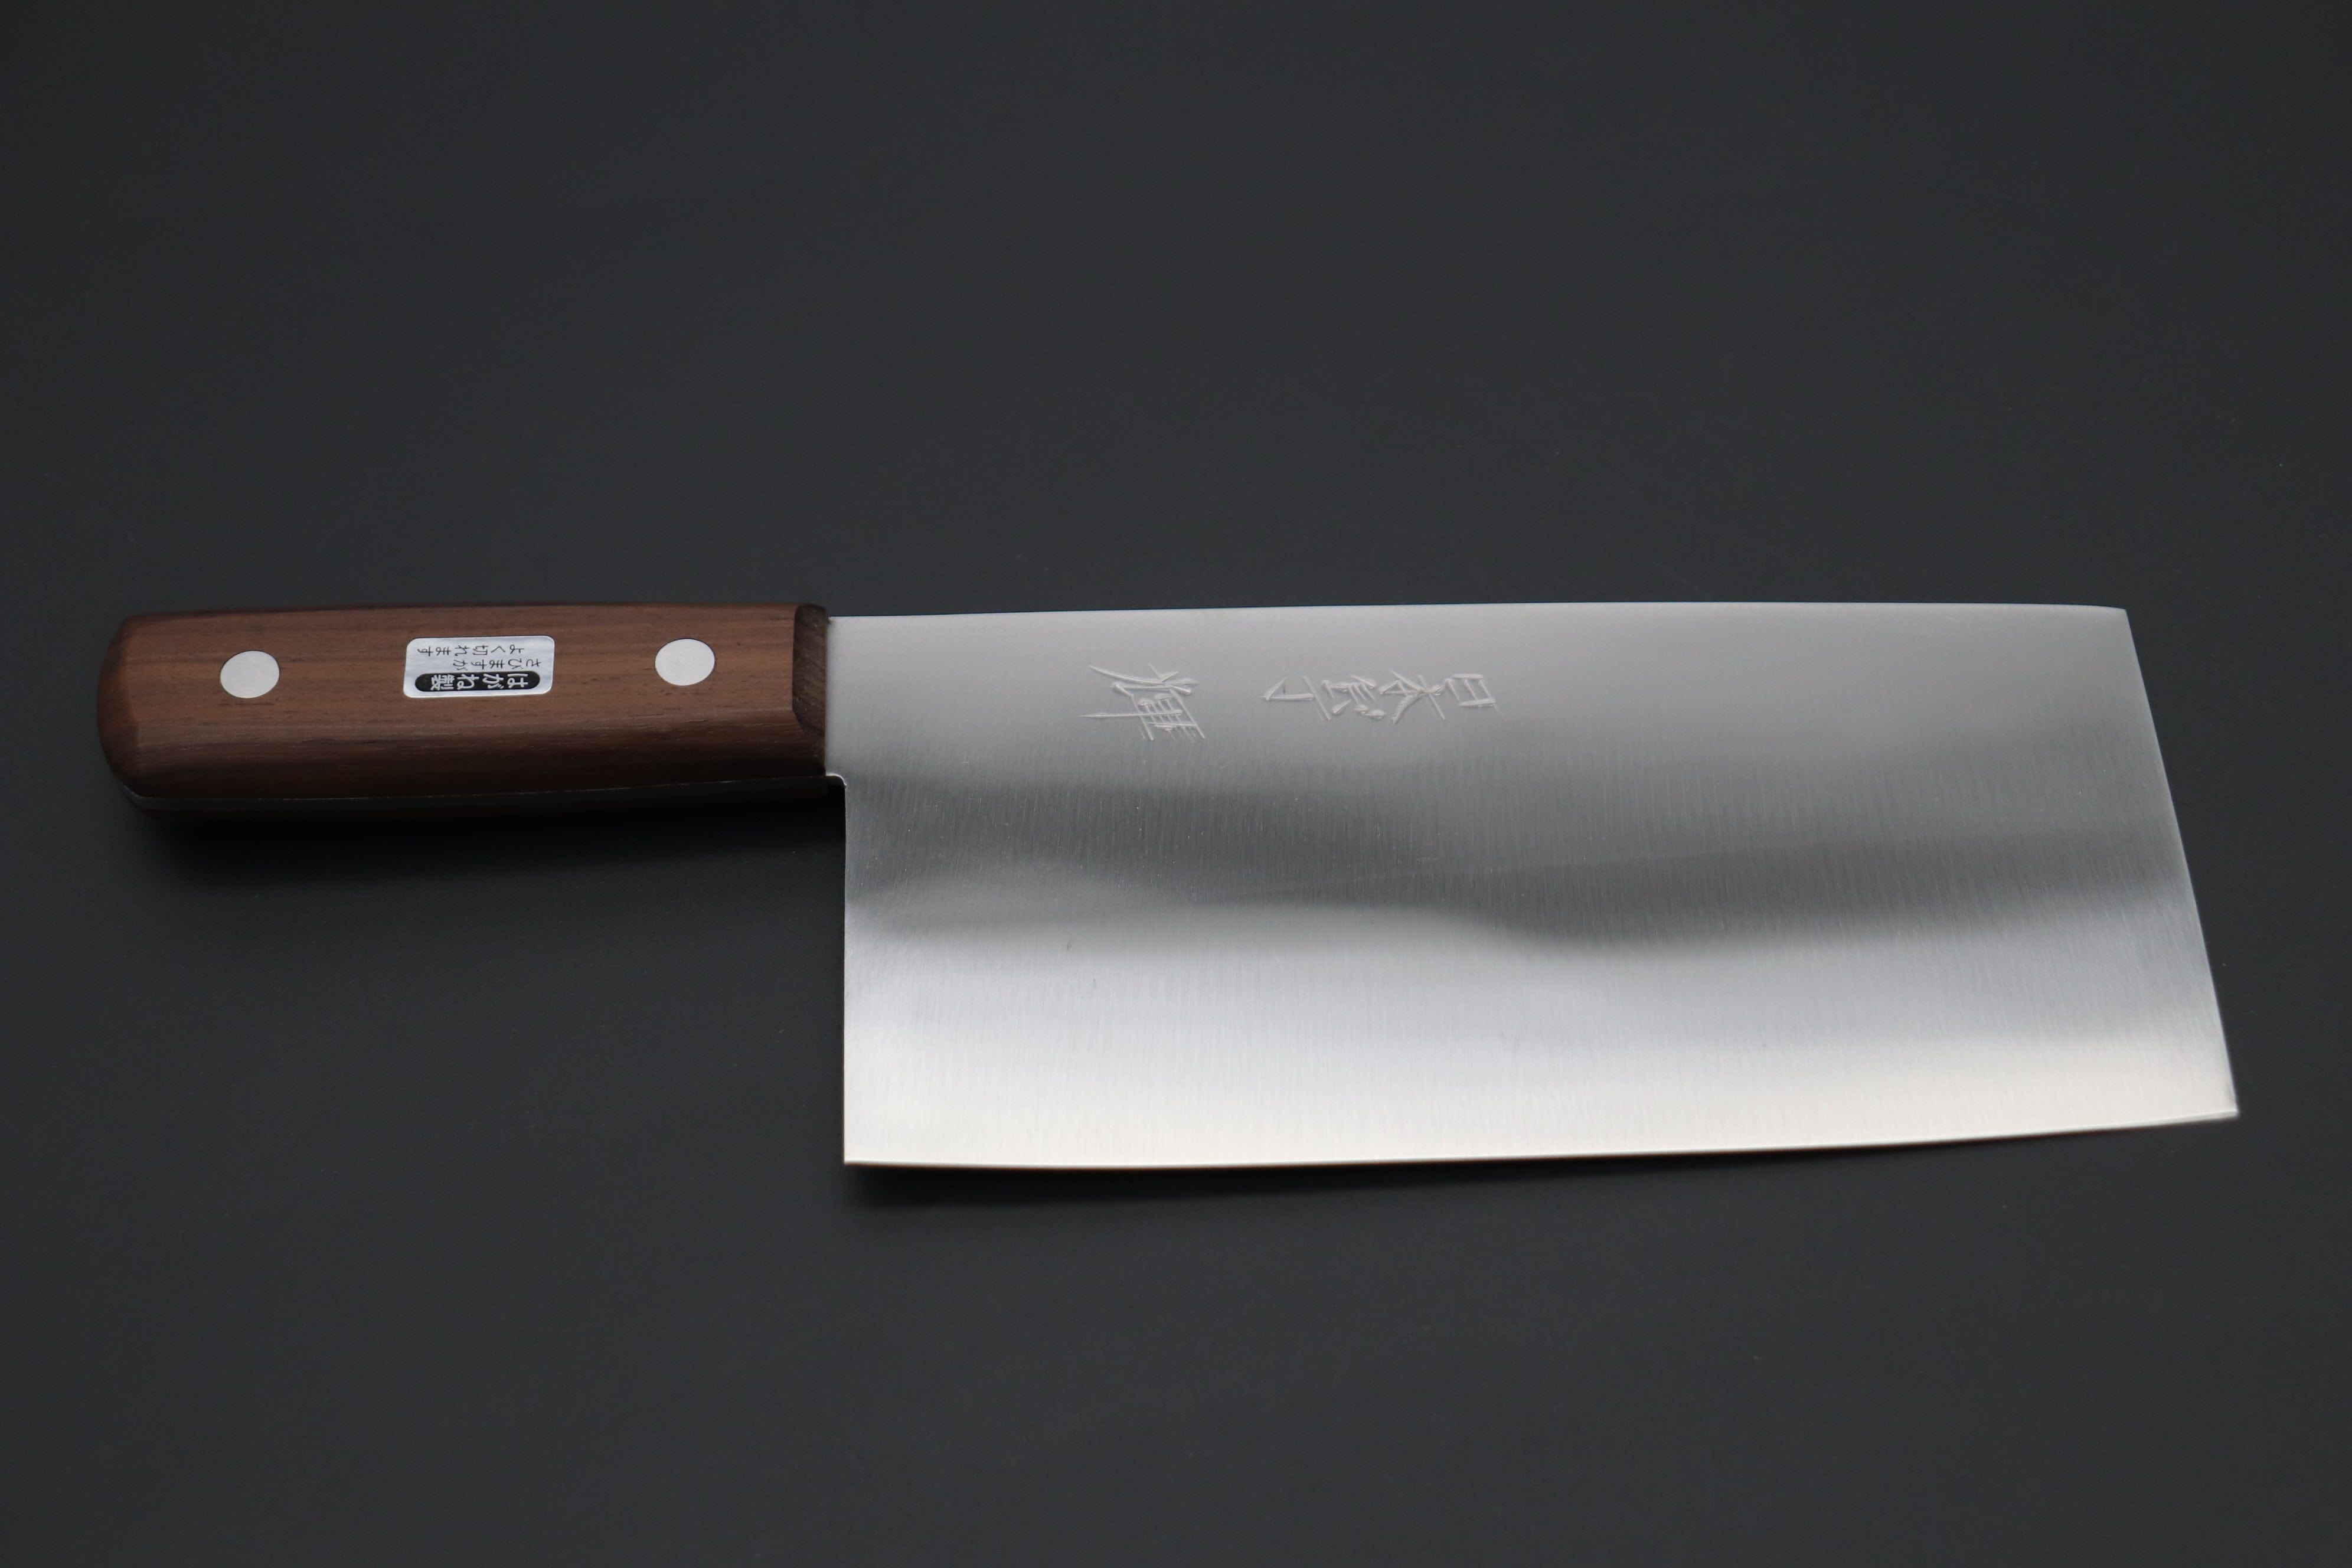 Damascus Steel Nakiri Chef Knife Chinese clever Knives Sharp Slicing Steak  kitchen knife Kitchen Cutlery - AliExpress